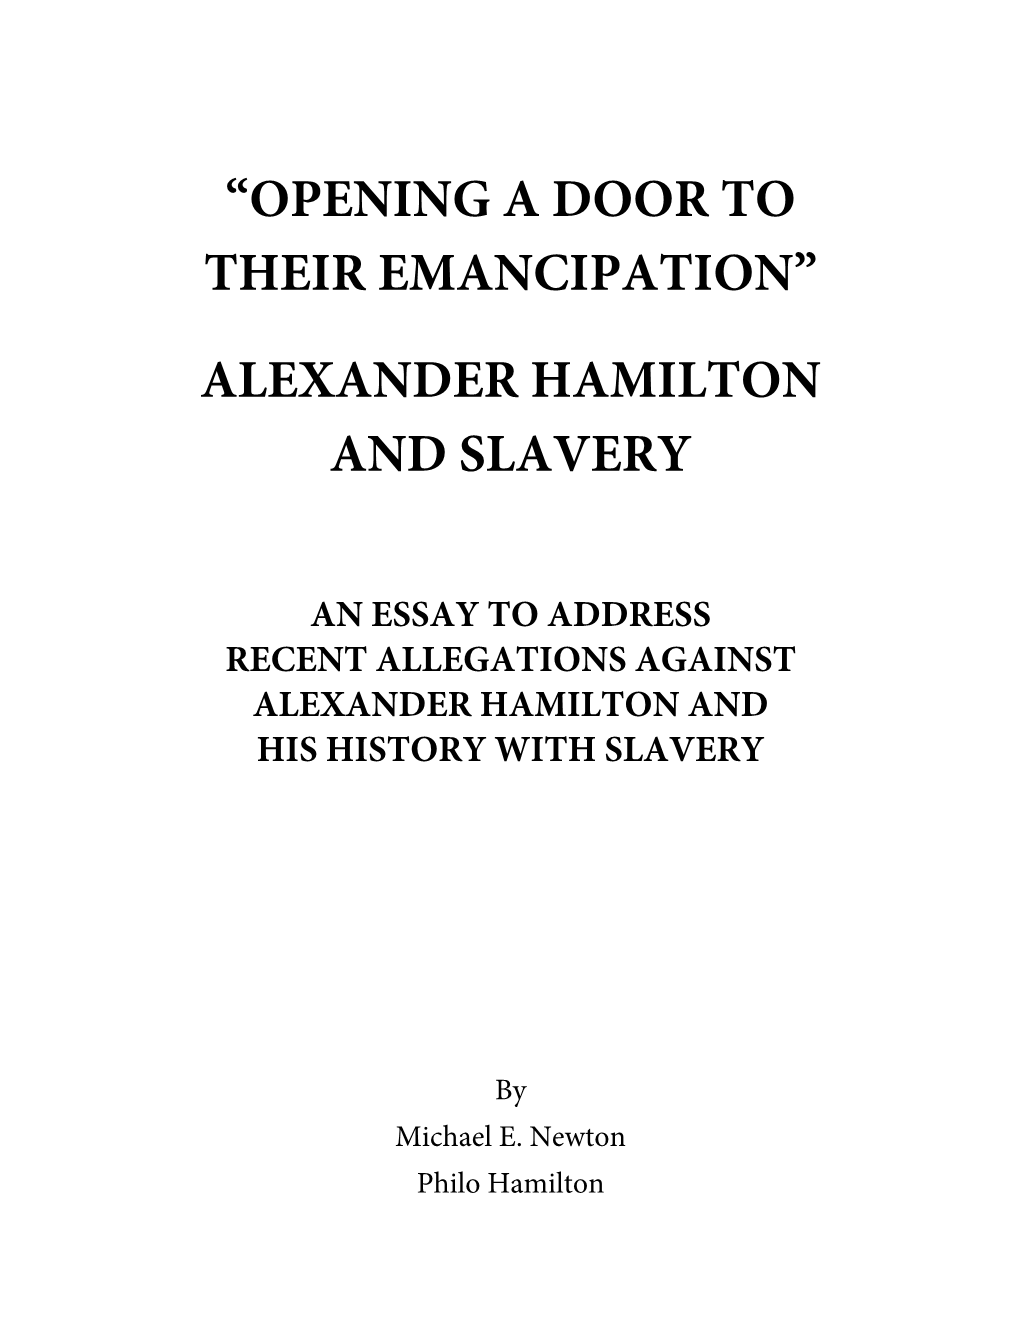 Opening a Door to Their Emancipation: Alexander